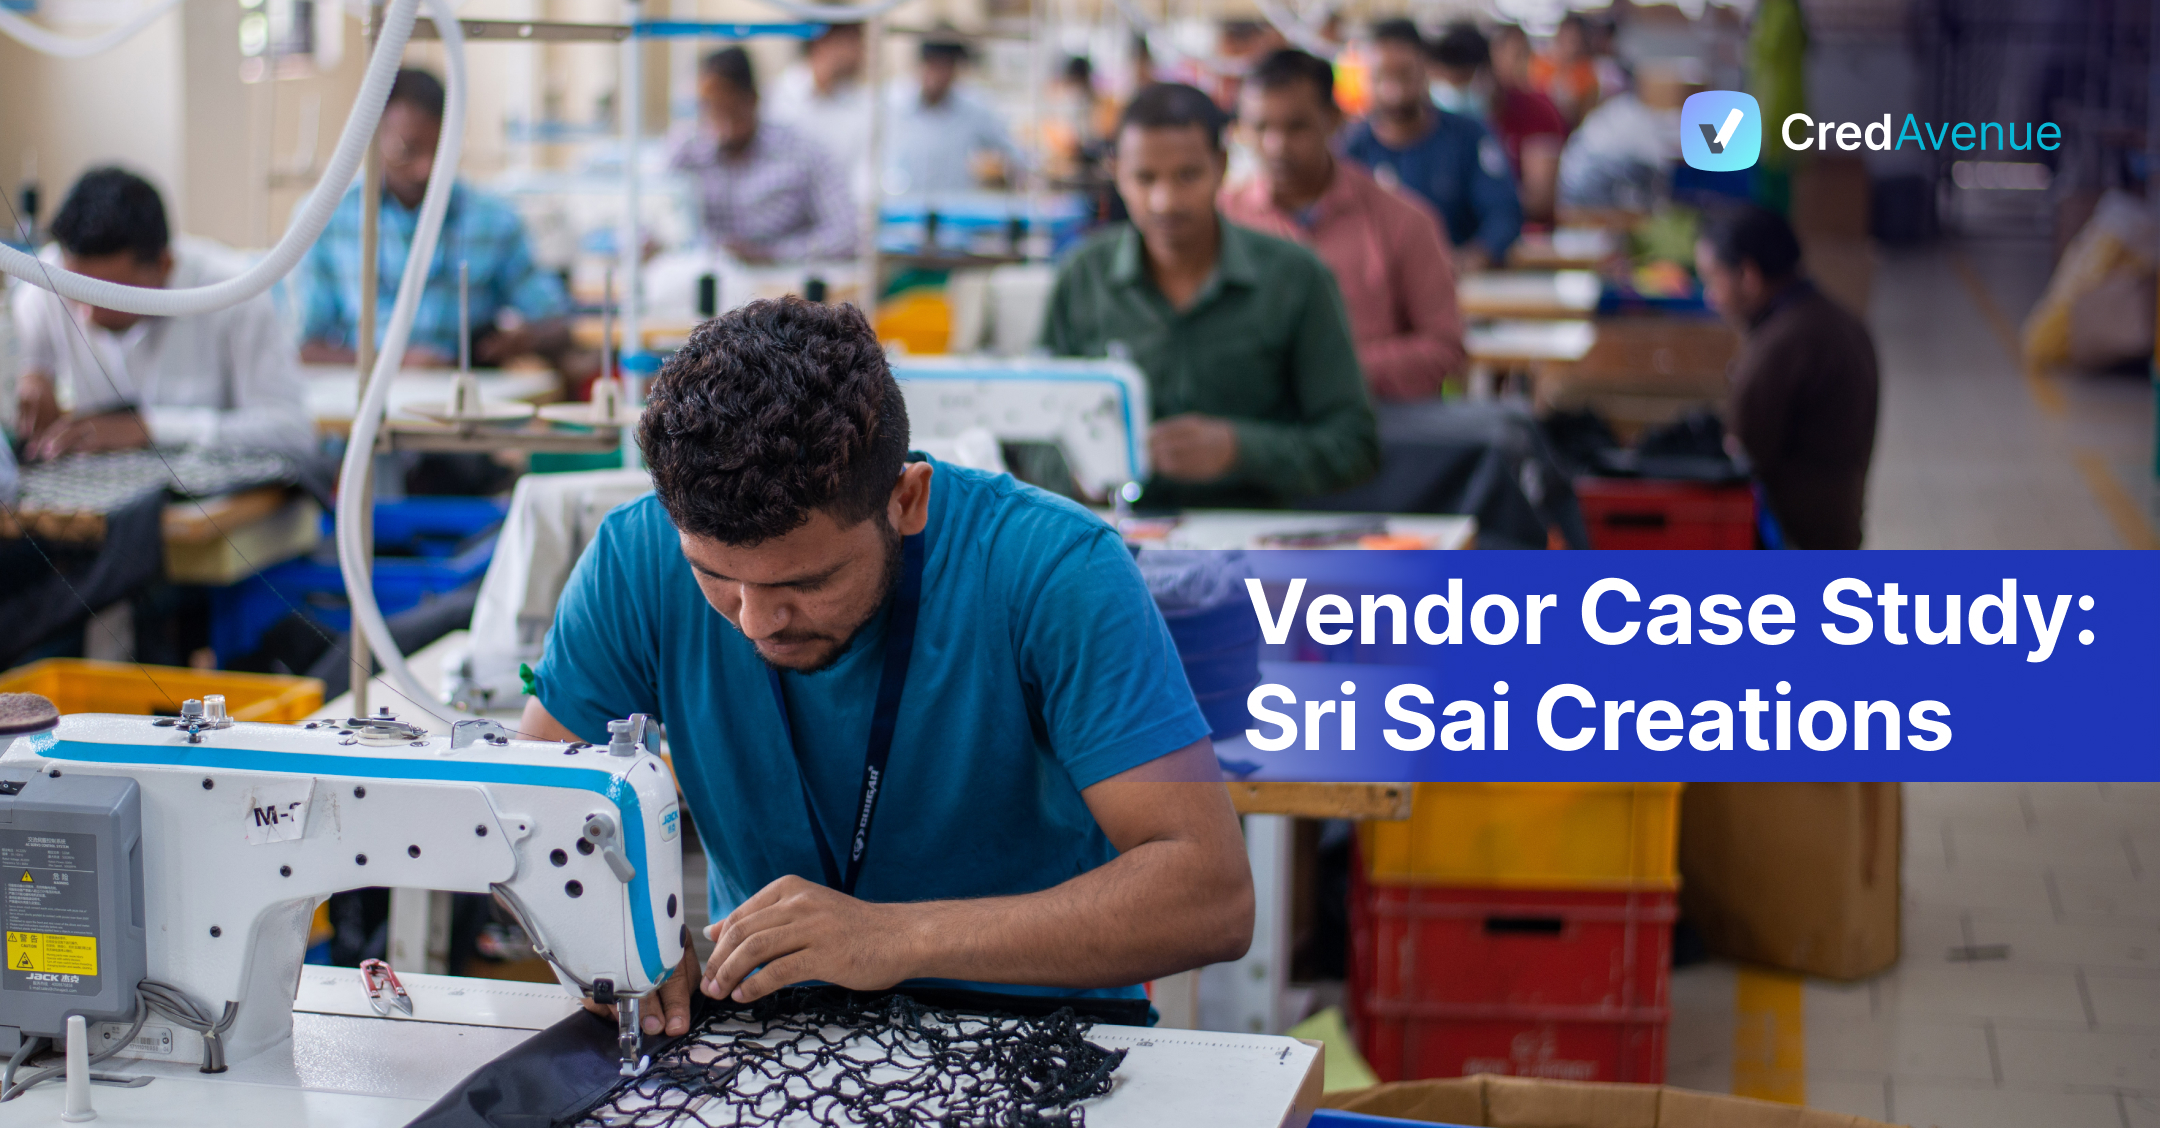 Sri Sai Creations’ Sales & Revenue Soars 20% After Onboarding CredAvenue’s Supply Chain Finance Platform